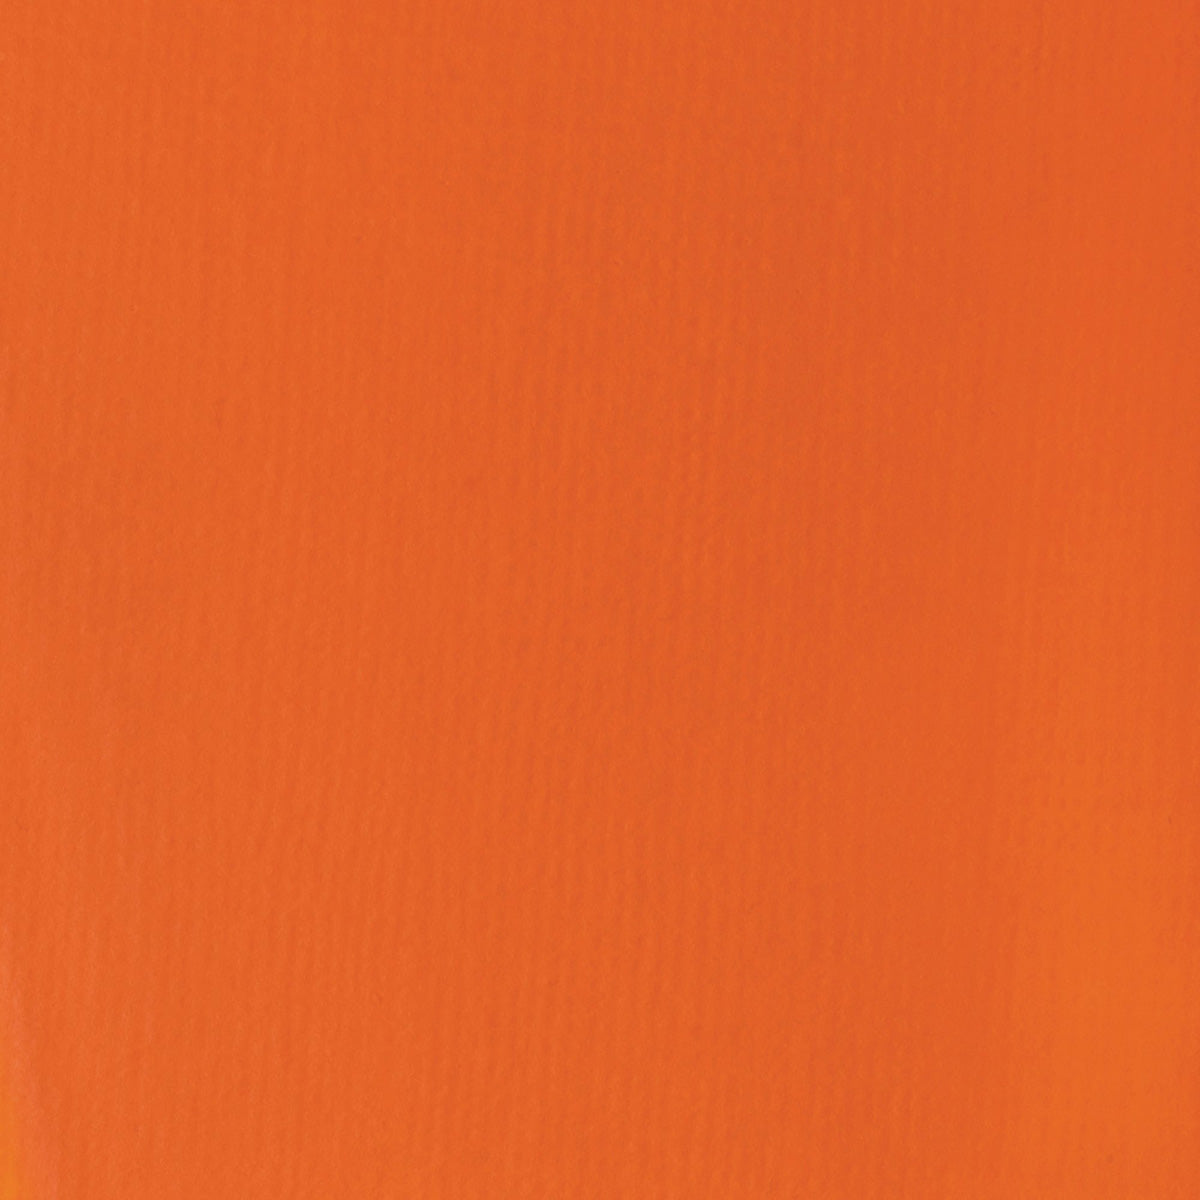 Liquitex Basics Fluid Acrylic 118ml - Vivid Red Orange S1